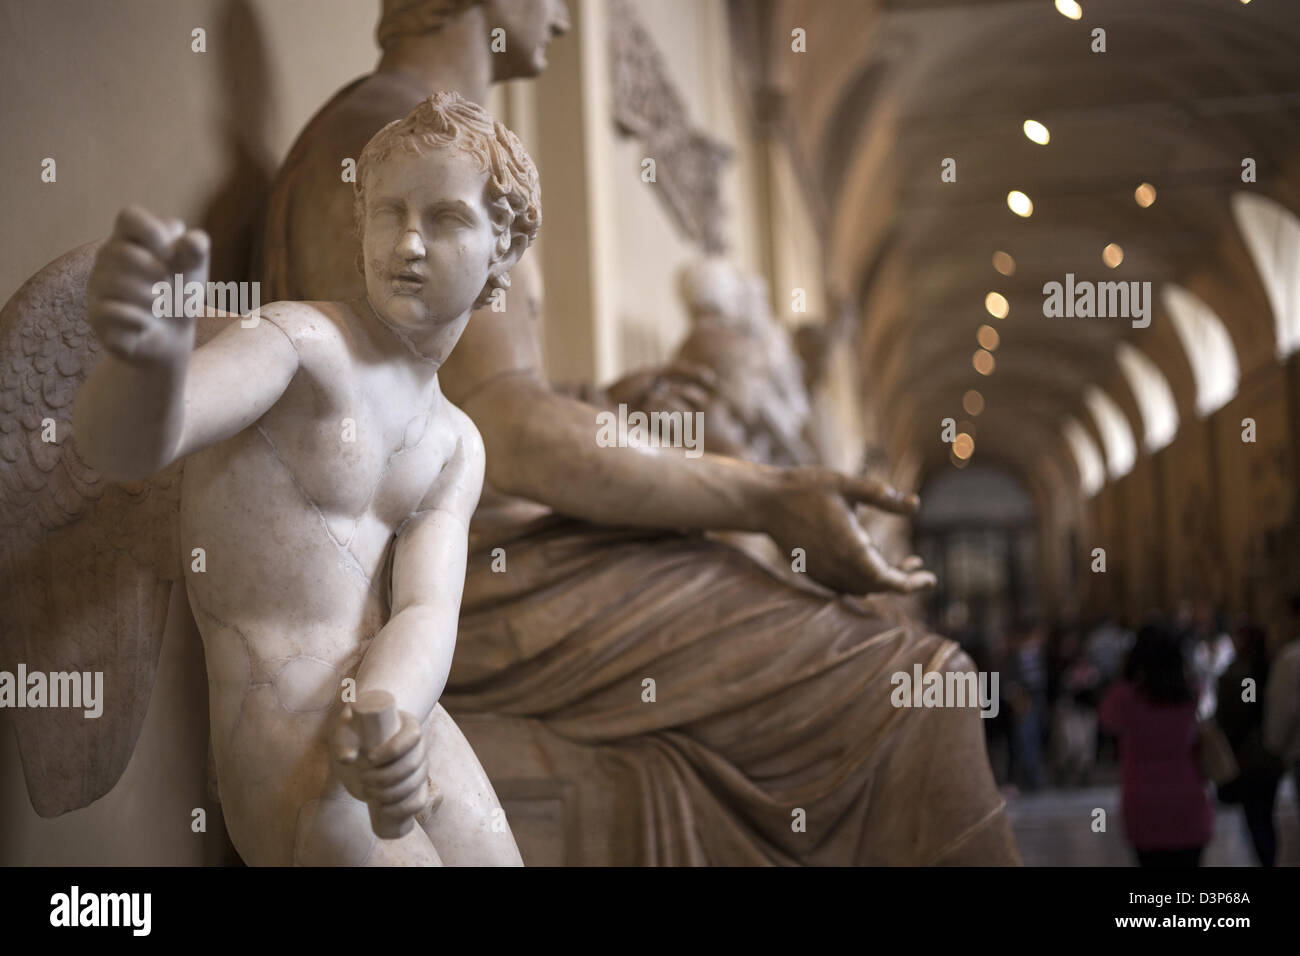 Klassische römische Skulptur Galerien im Vatikanischen Museum in Rom zeigen Götter und Kaiser unter den Skulpturen Stockfoto